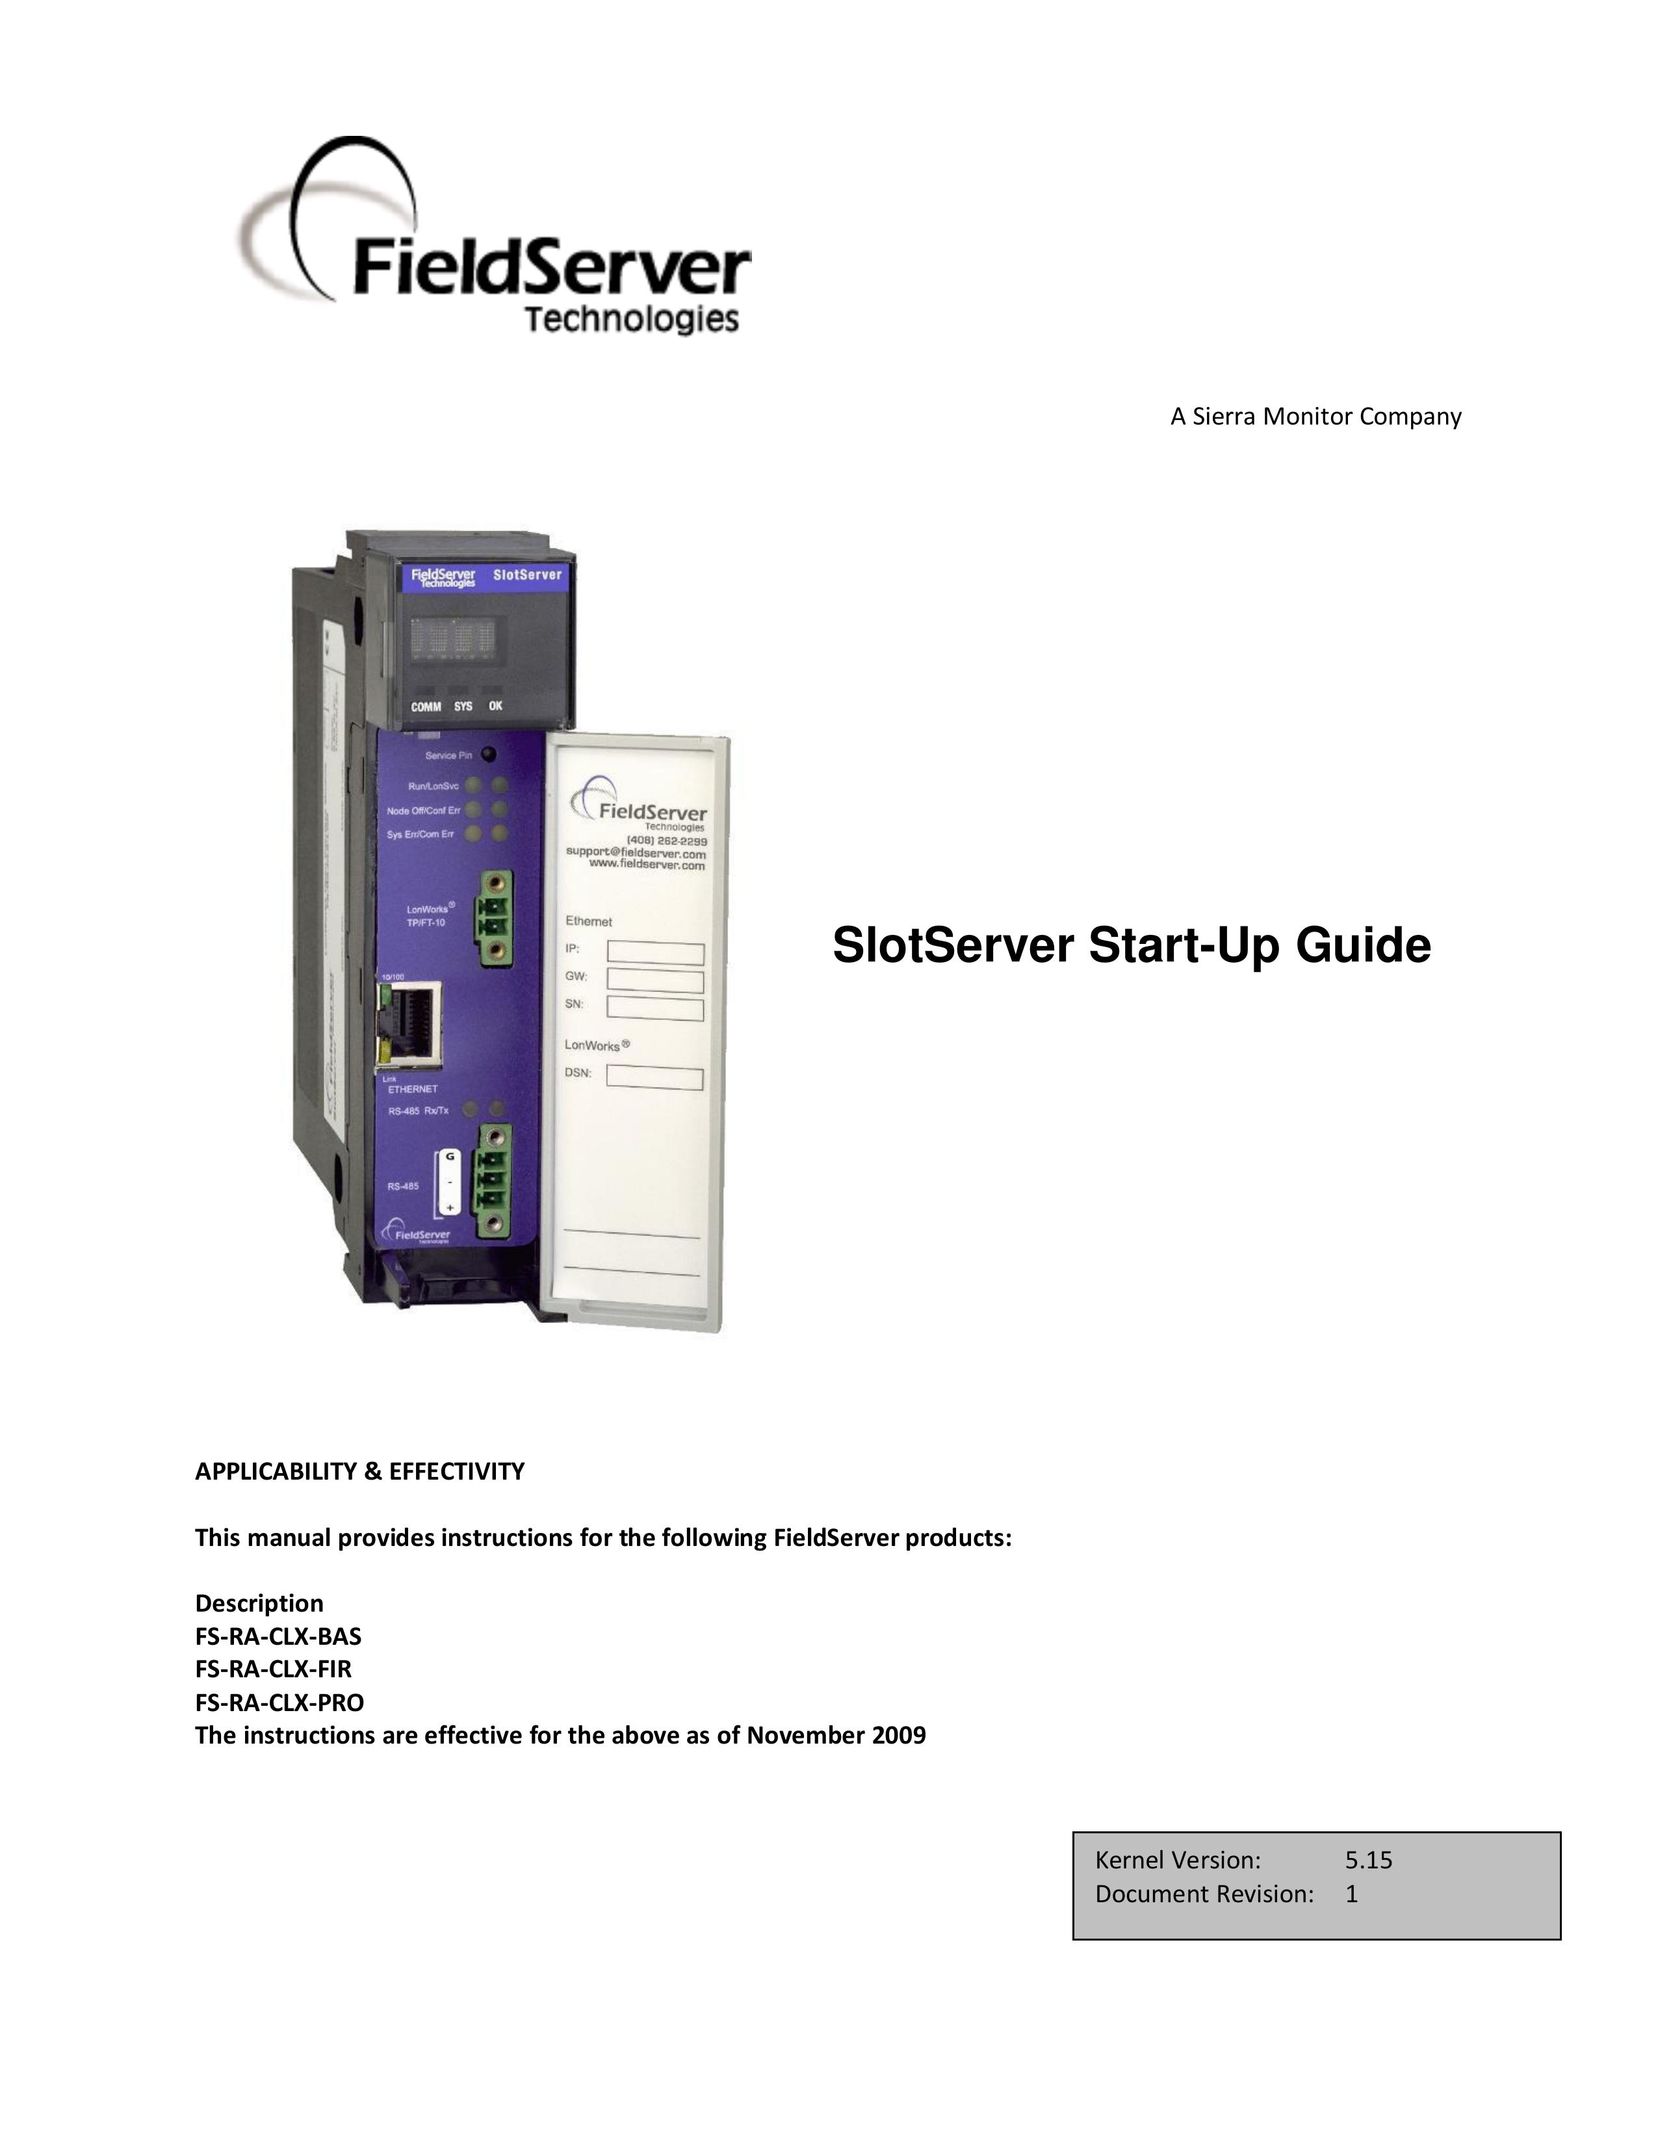 FieldServer FS-RA-CLX-FIR Server User Manual